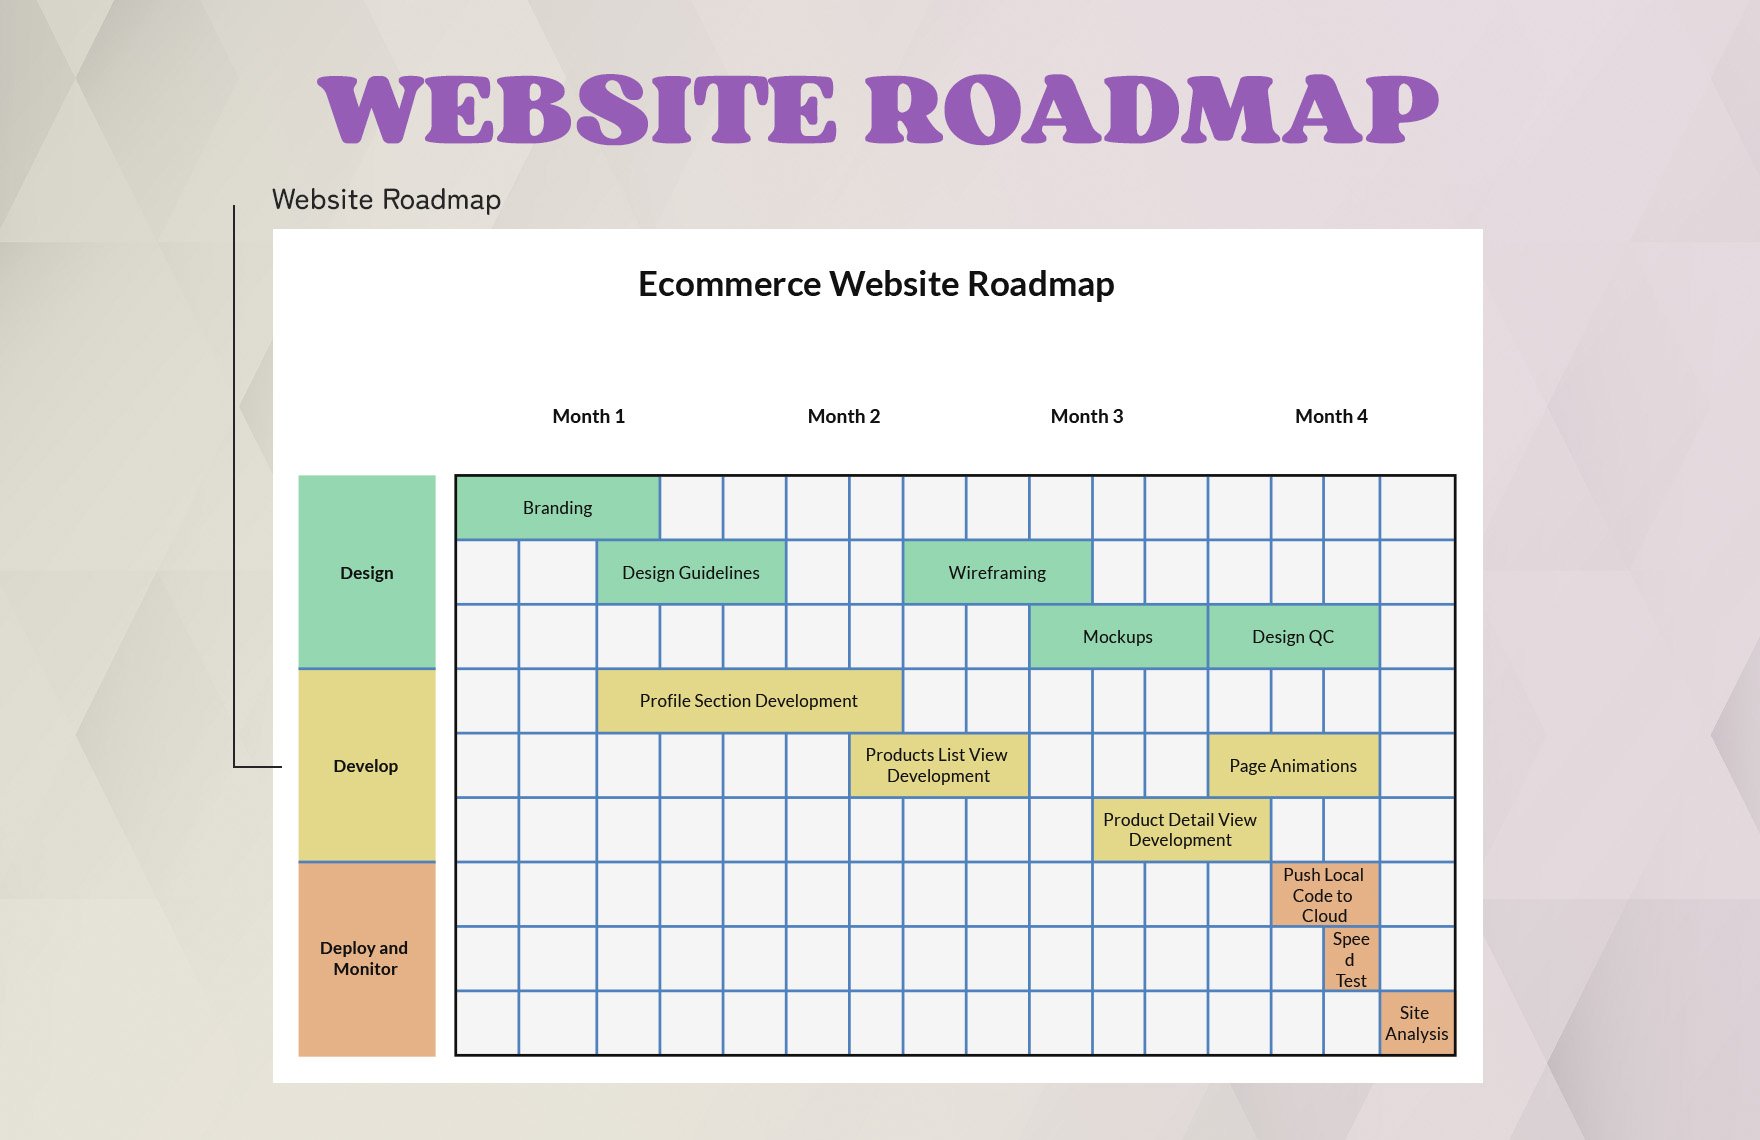 Ecommerce Website Roadmap Template